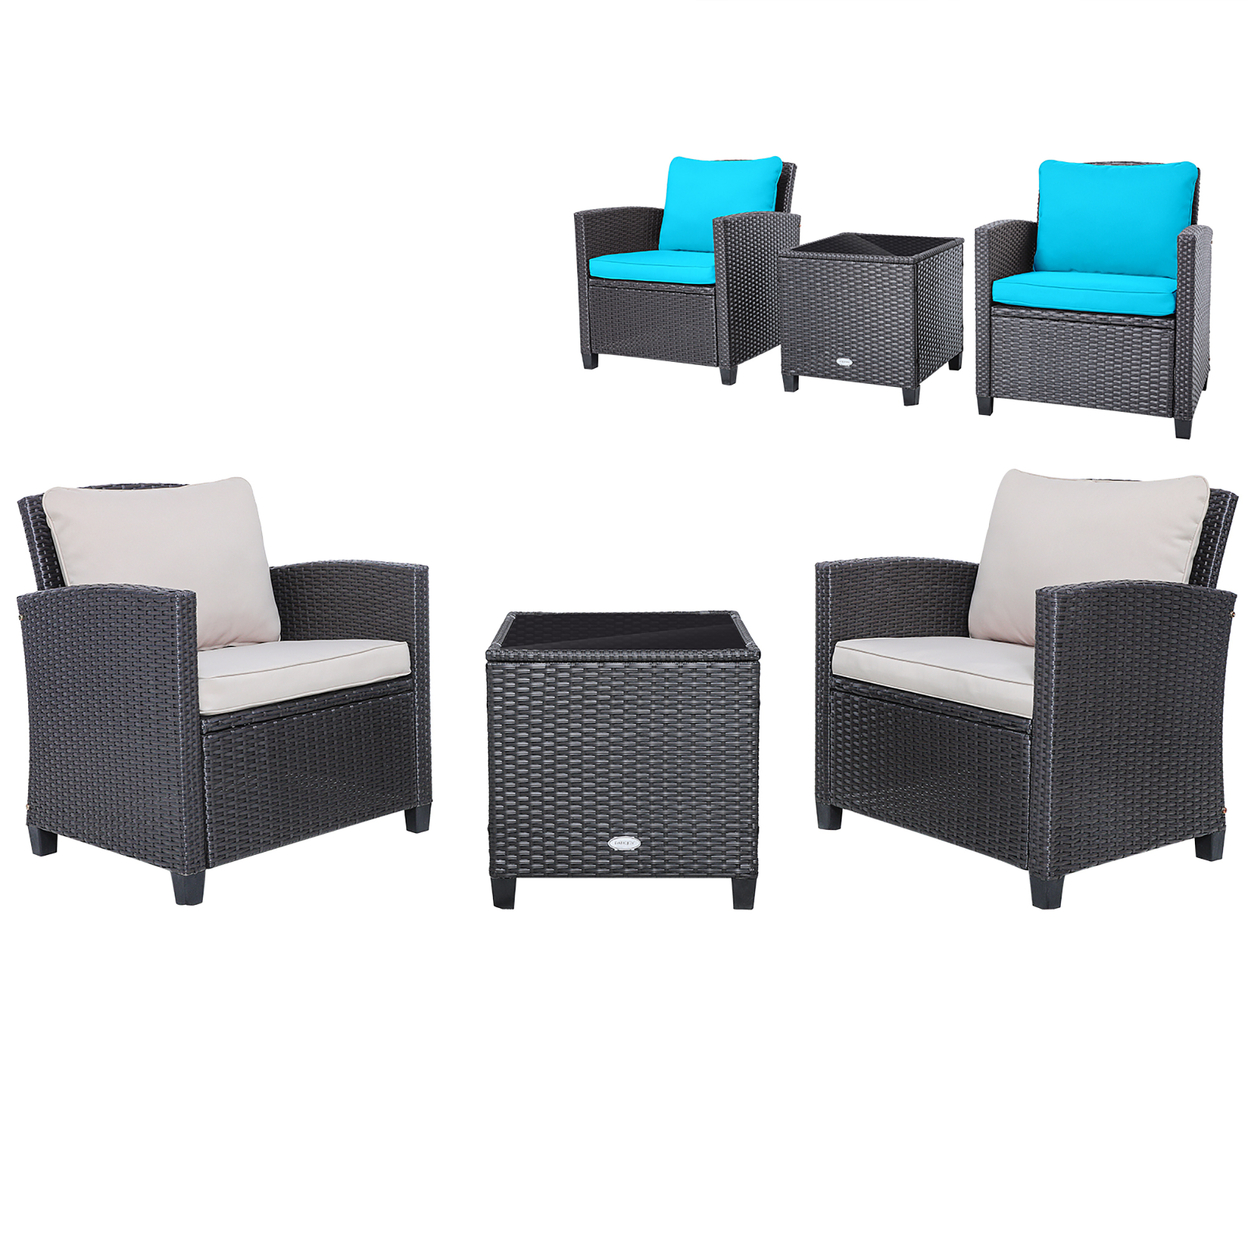 3PCS Outdoor Patio Rattan Conversation Set W/ Beige & Turquoise Cushion